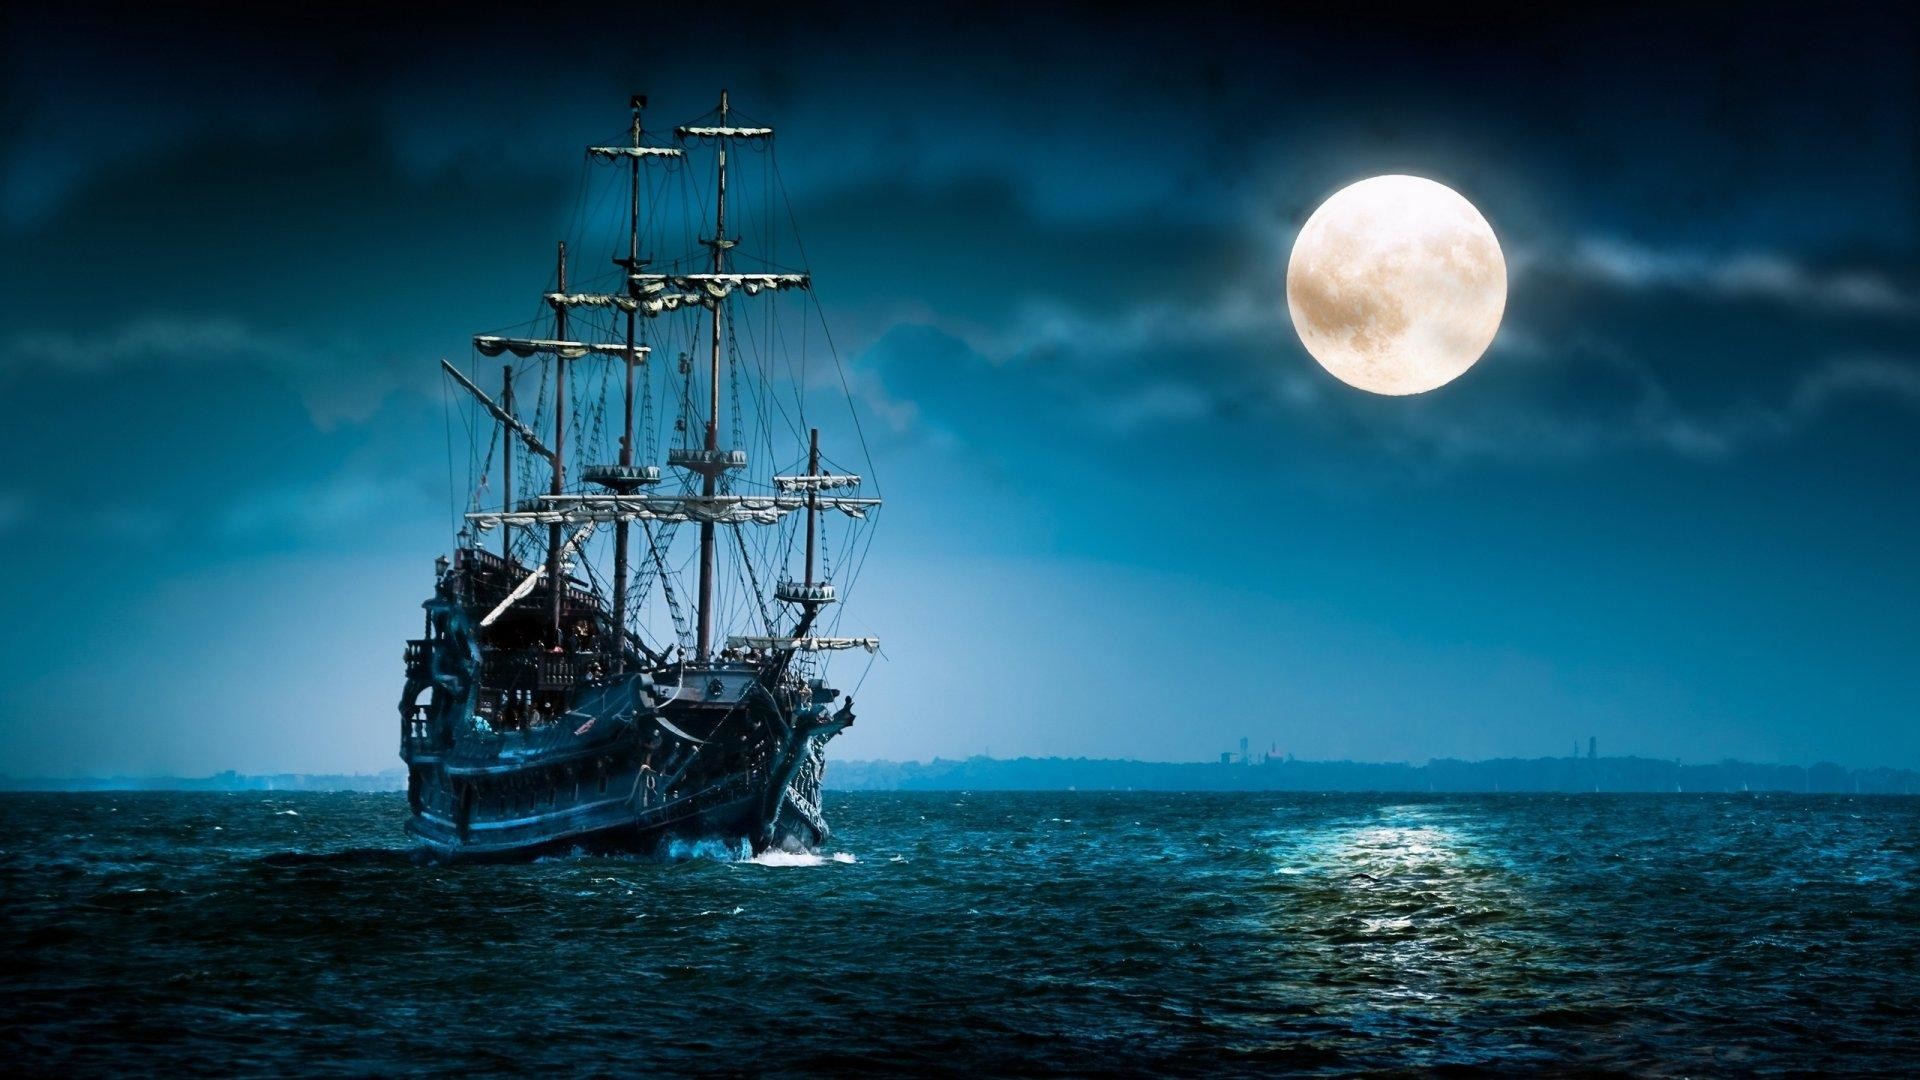 1920x1080 Sailboat-sea-moon-ship-boat-ocean-night-mood-